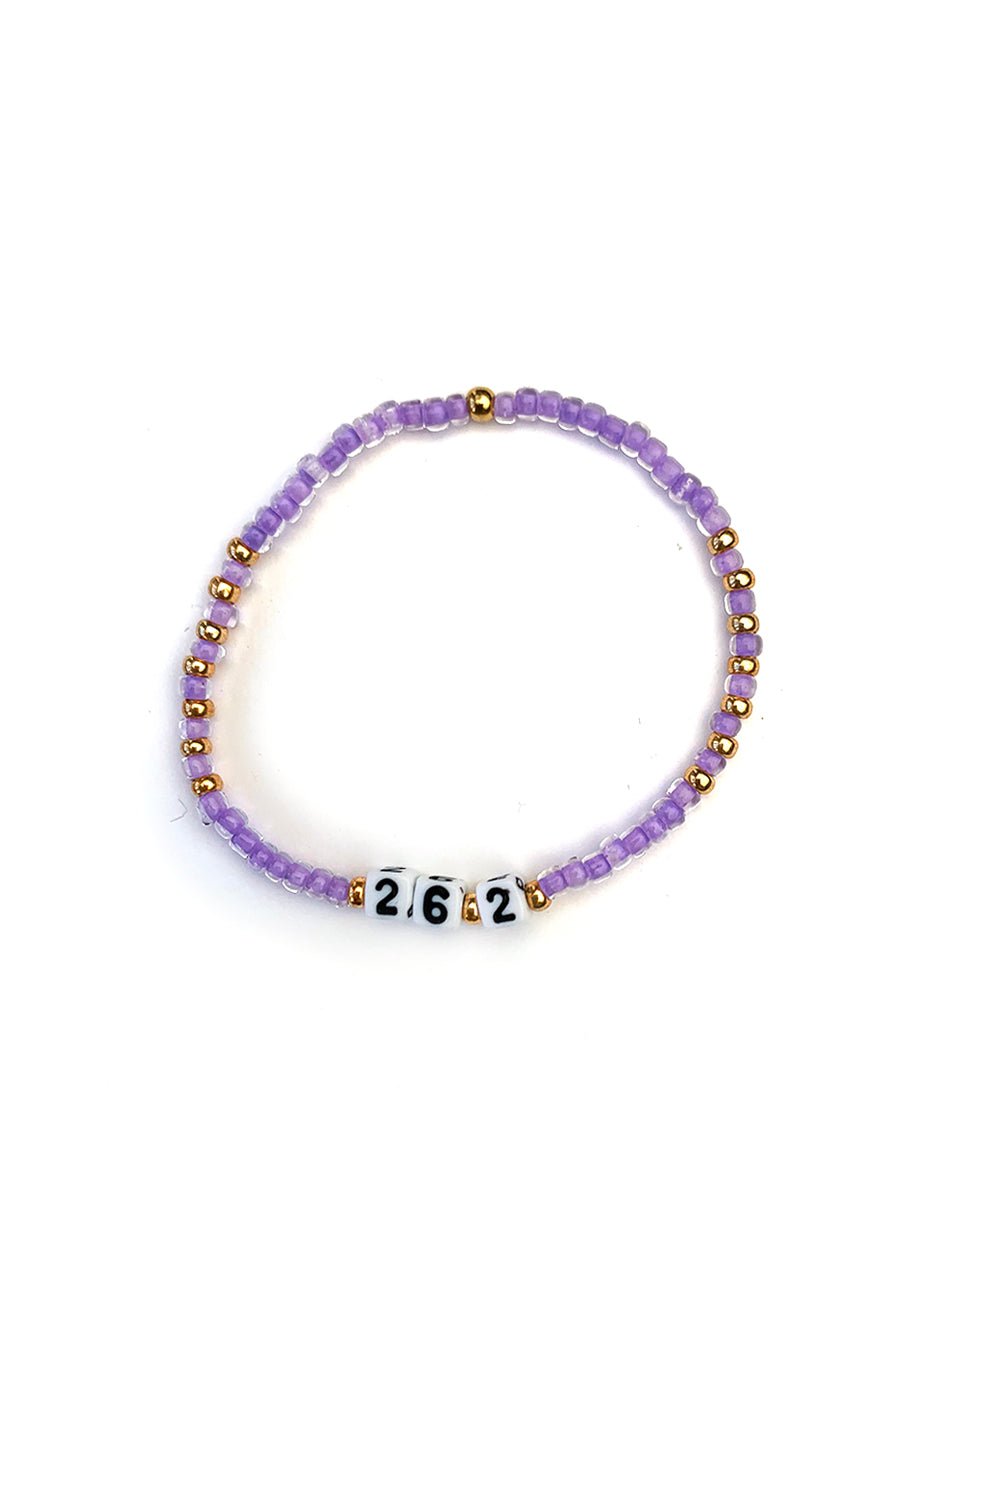 Sarah Marie Design Studio Bracelet 6.25" / 26.2 Disney Inspired Distance Bracelet